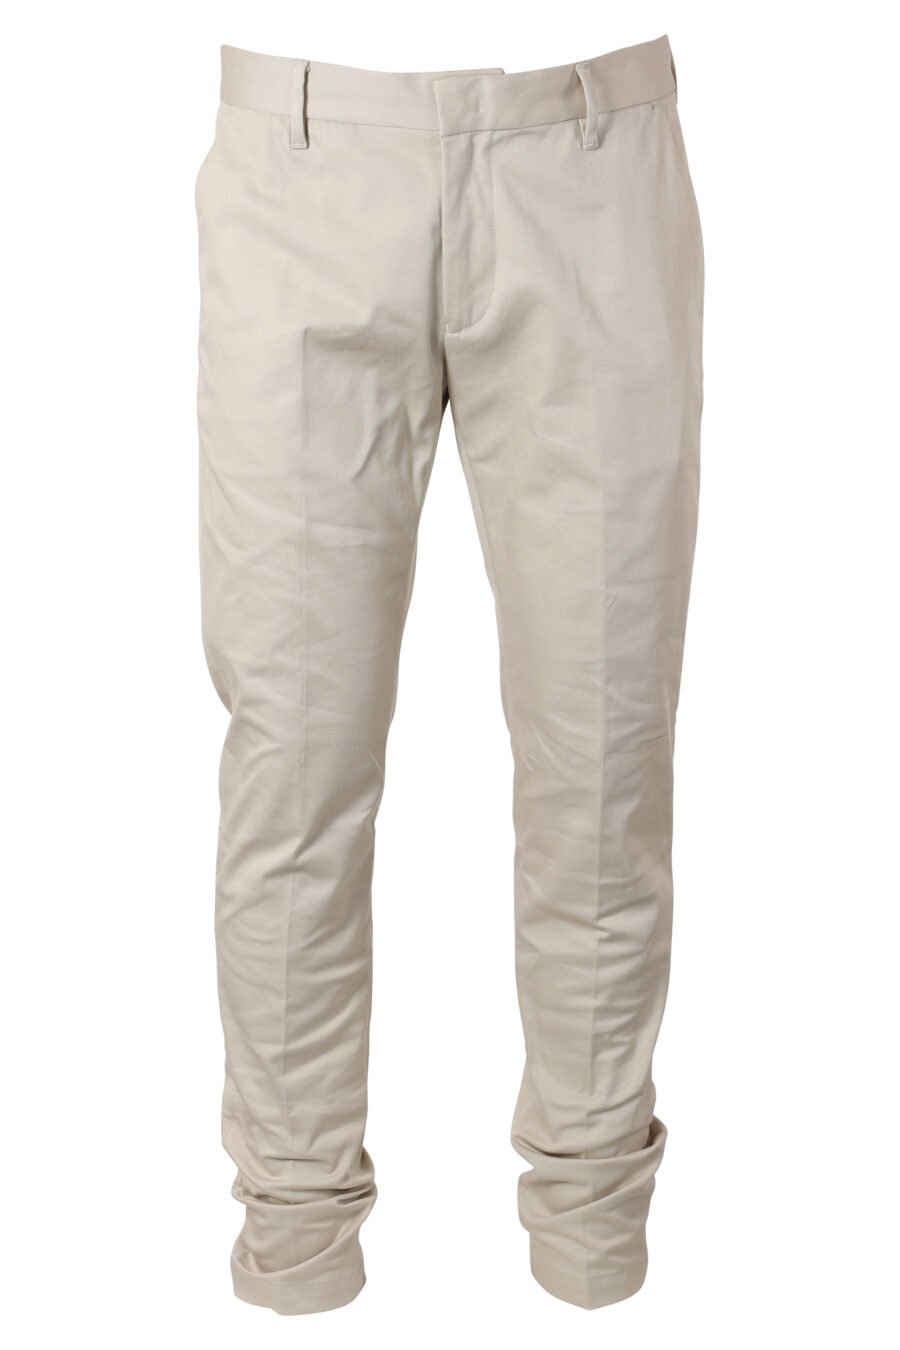 Pantalon beige avec logo - IMG 9951